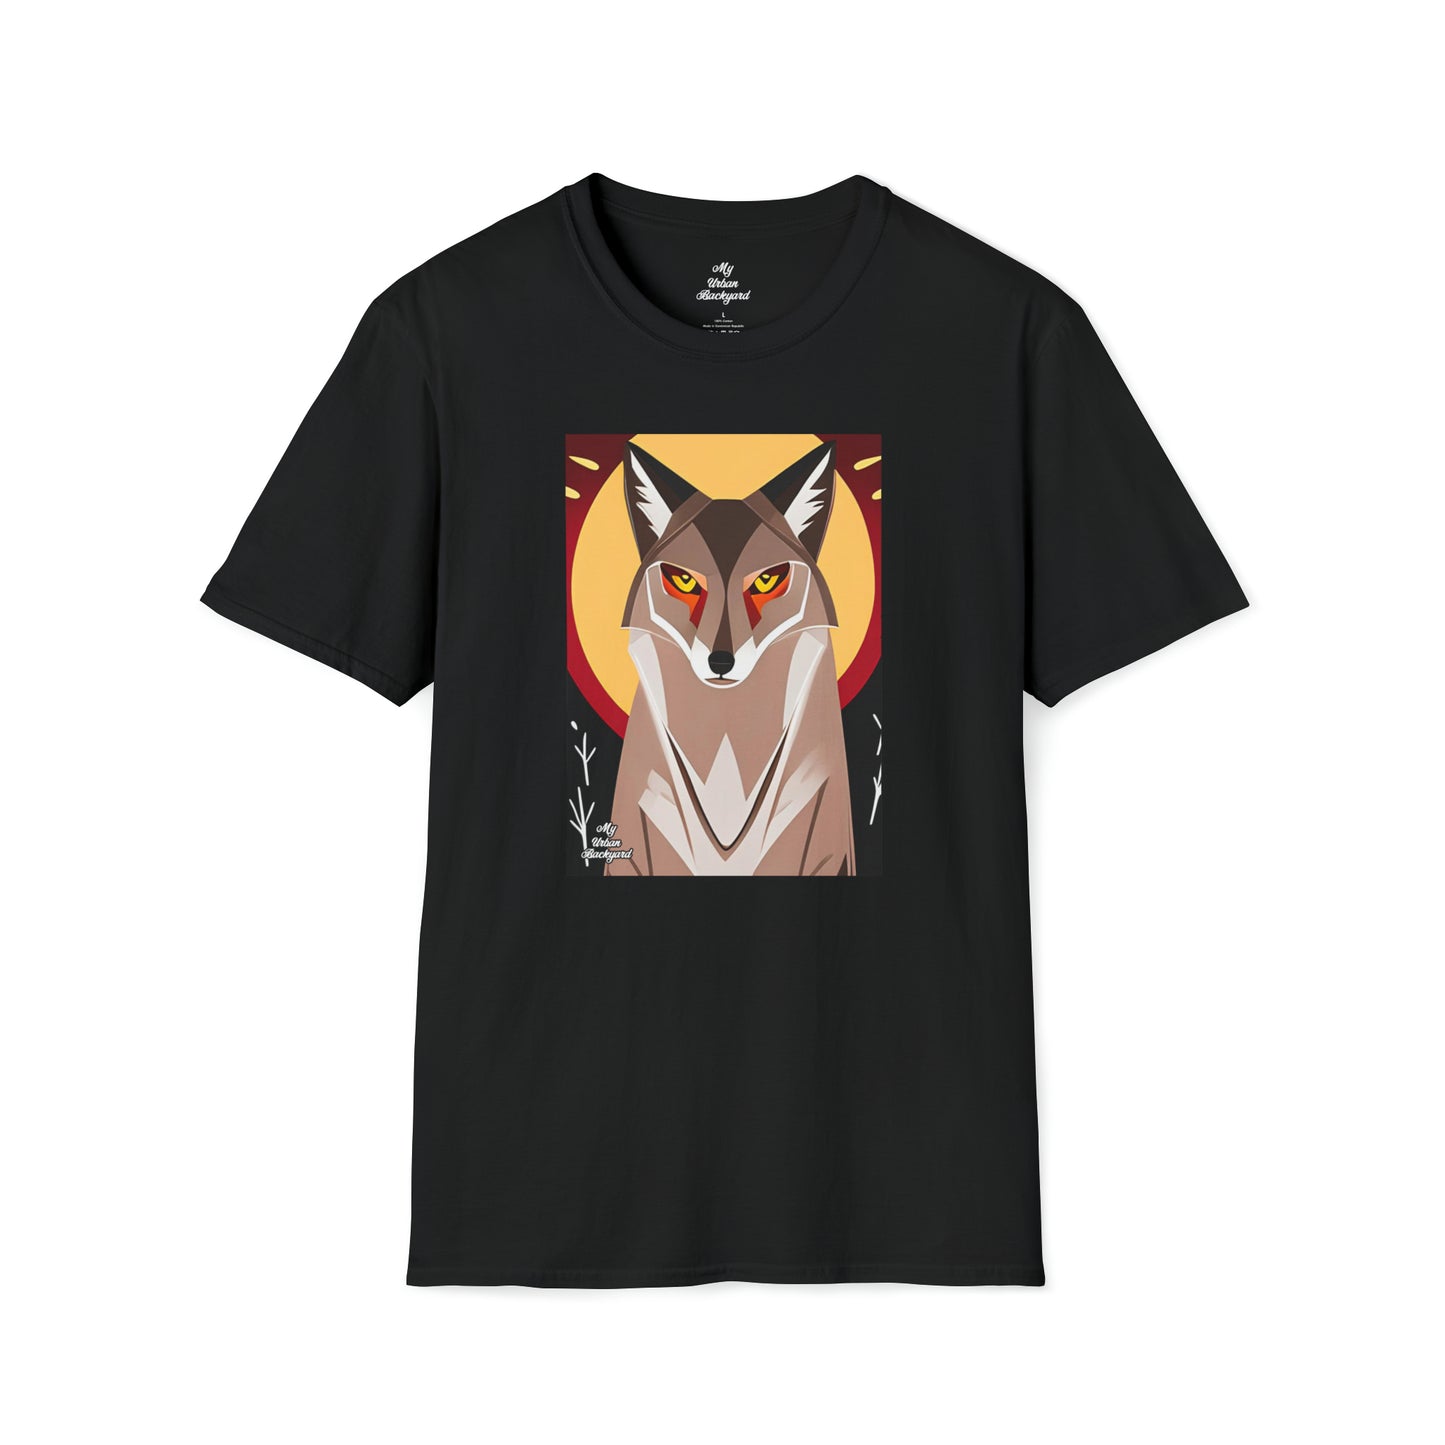 Sunset Coyote, Soft 100% Cotton T-Shirt, Unisex, Short Sleeve, Classic Fit